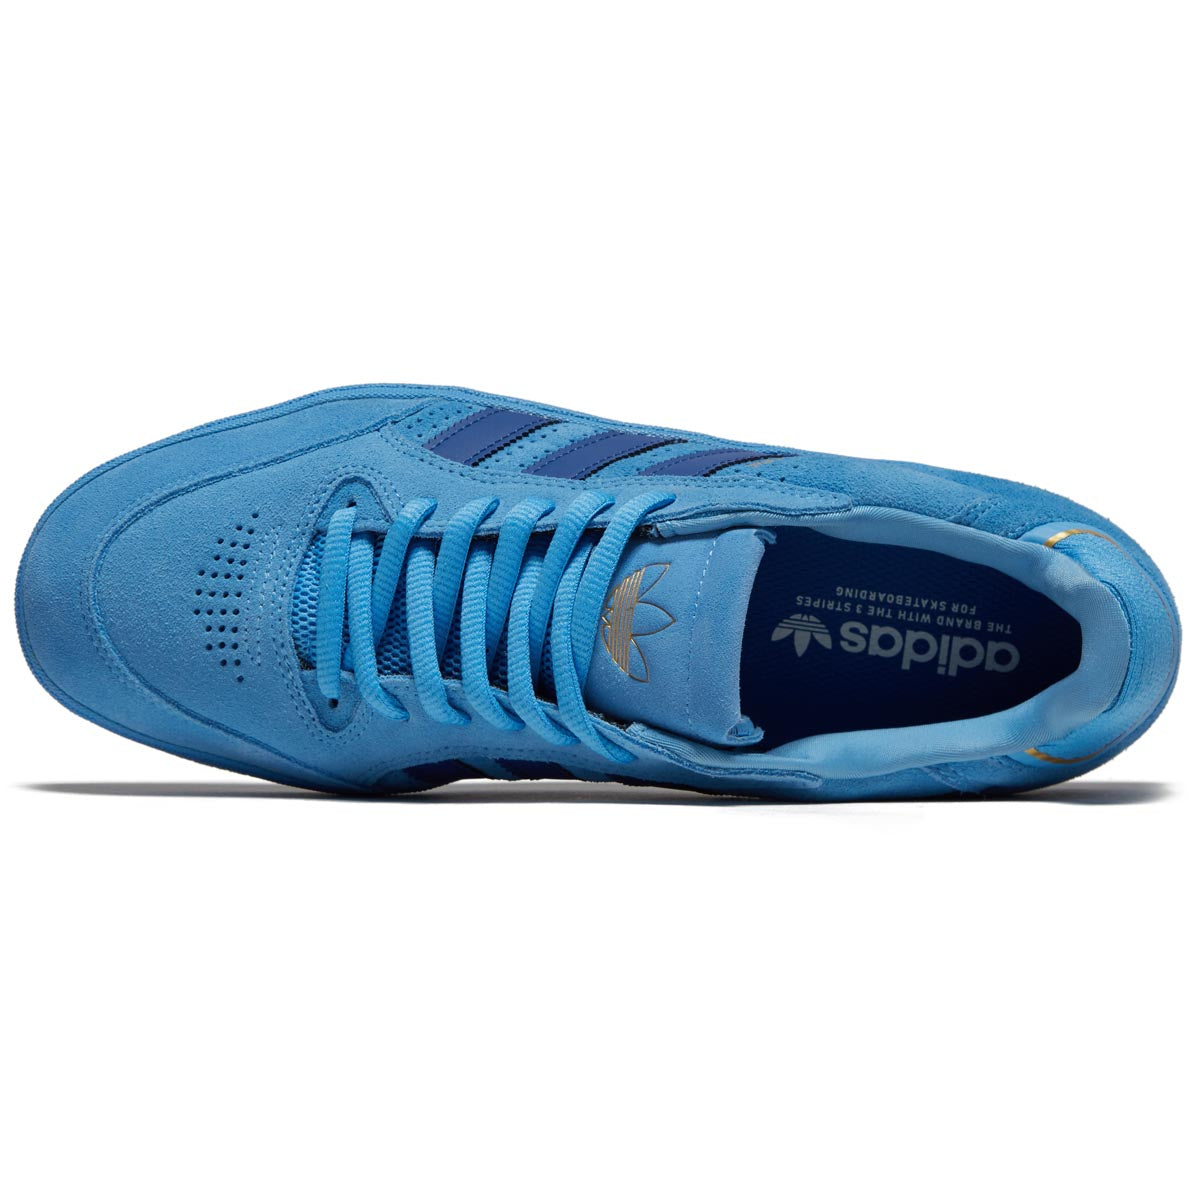 Adidas Tyshawn Low Shoes - Blue Burst/Royal/Bluebird image 3